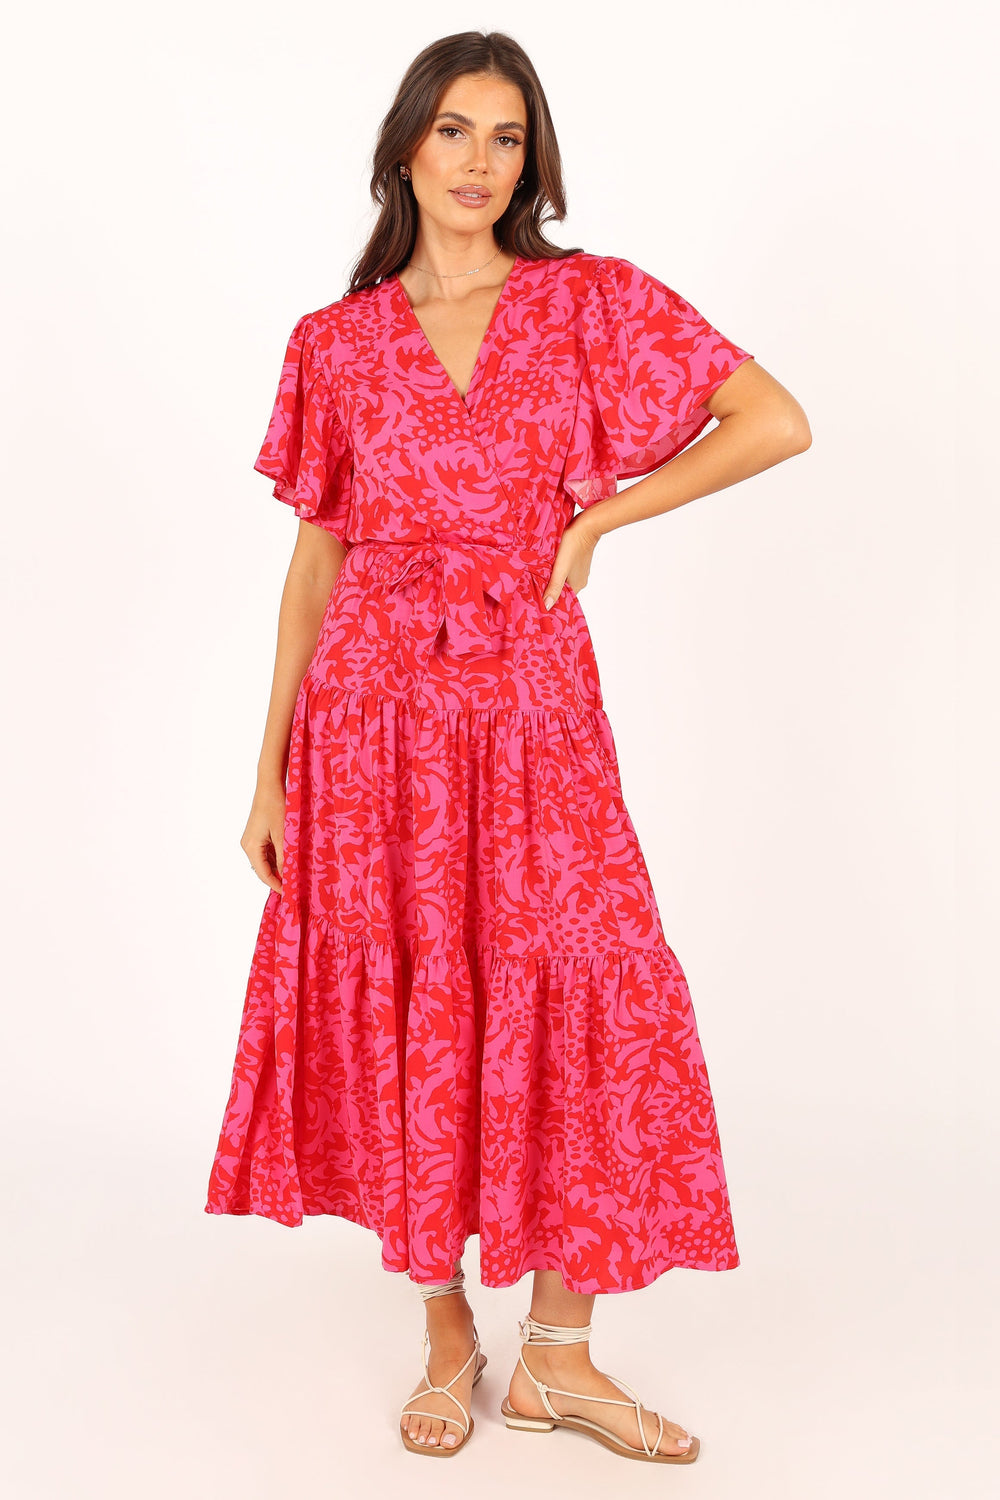 Petal and Pup USA DRESSES Barker Dress - Pink Red Floral